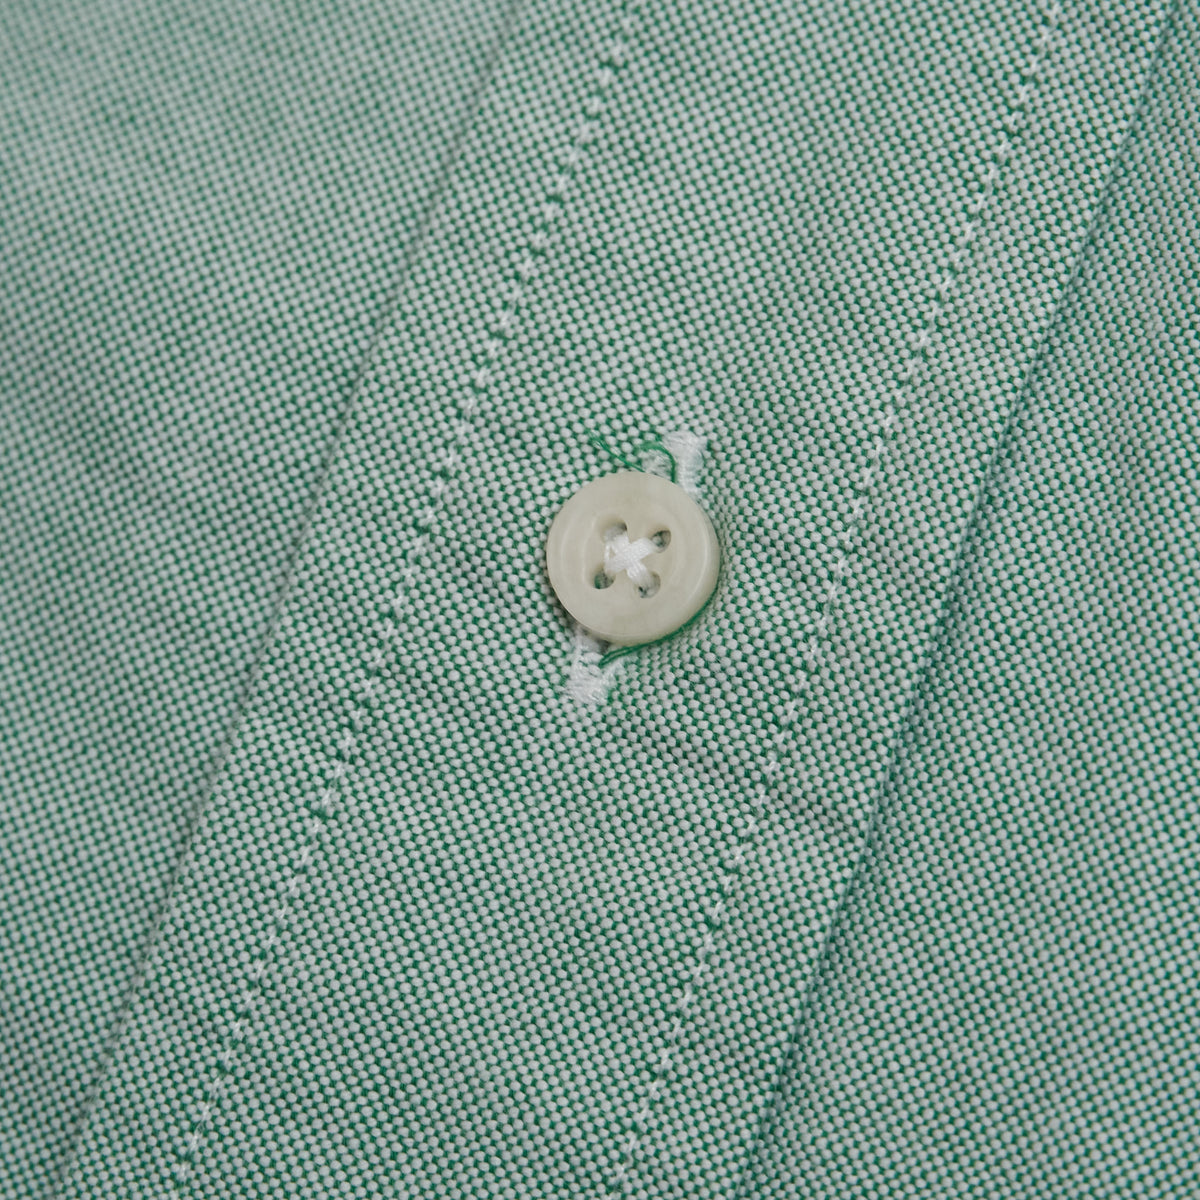 Gitman Vintage Classic Oxford Button Down Shirt